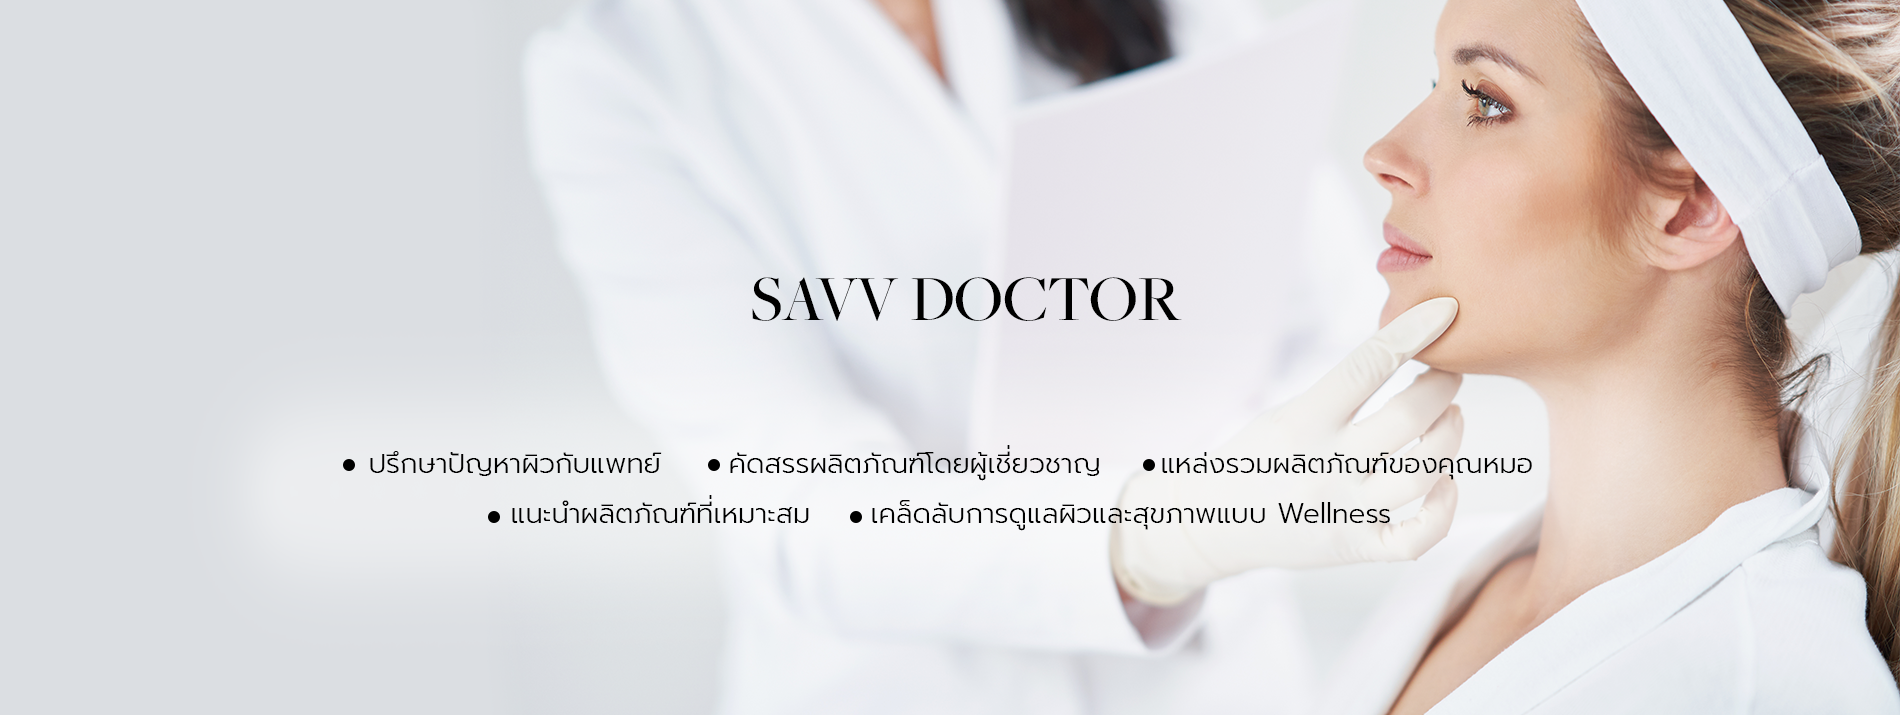 SAVV Doctor by SAVV SKIN